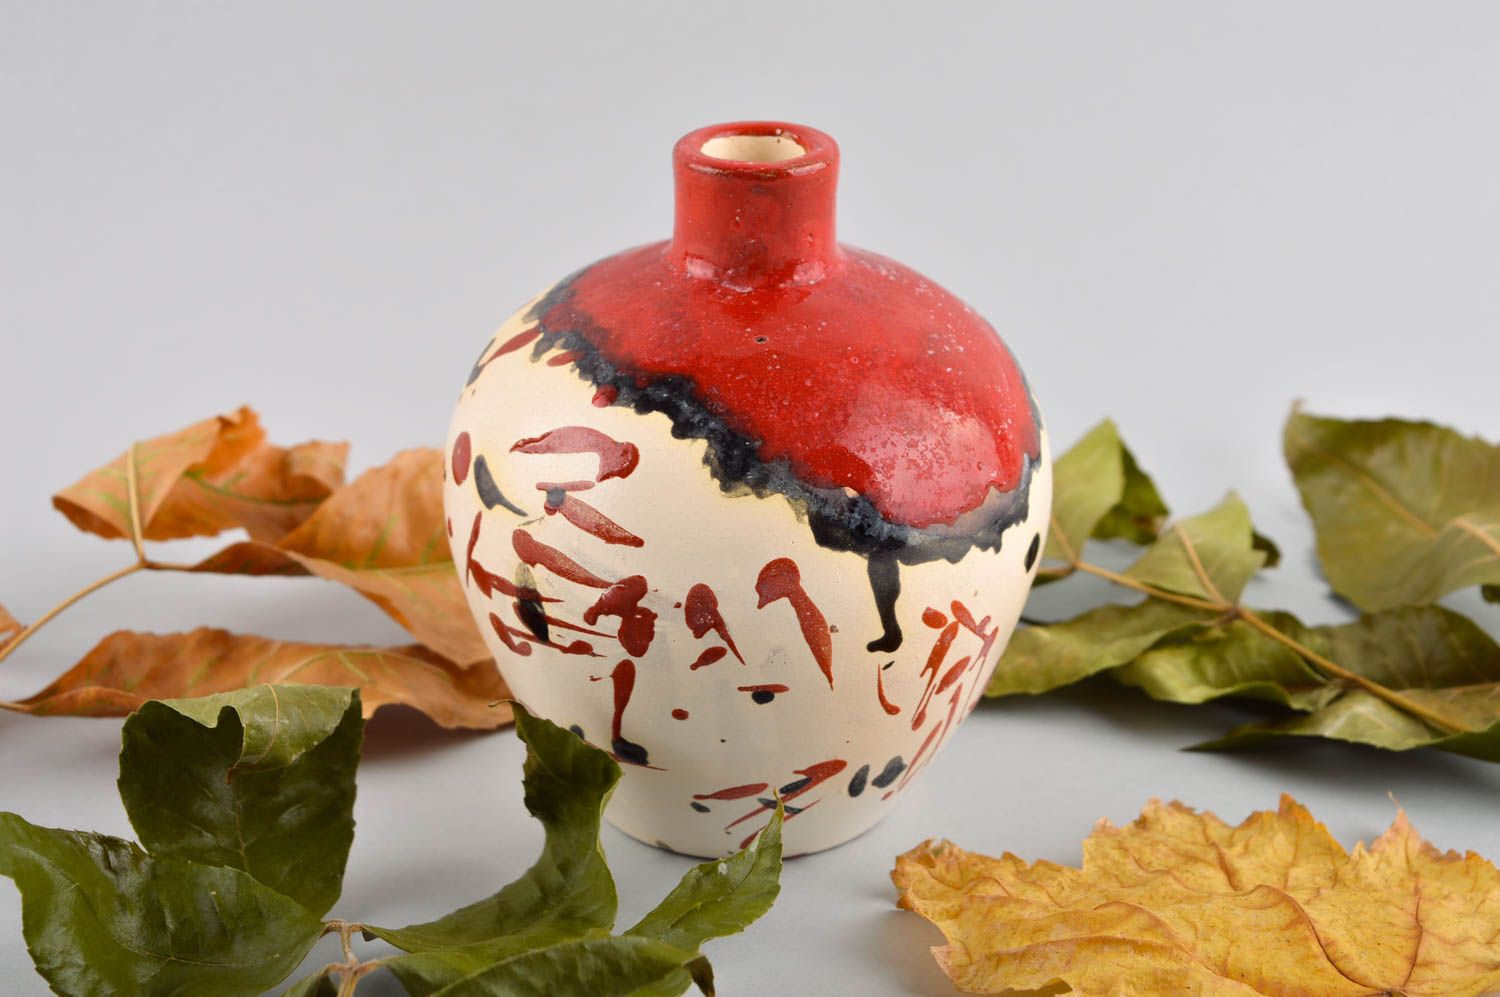 12 oz ceramic hand-painted sake, vodka pitcher 5,51, 0,78 lb photo 1